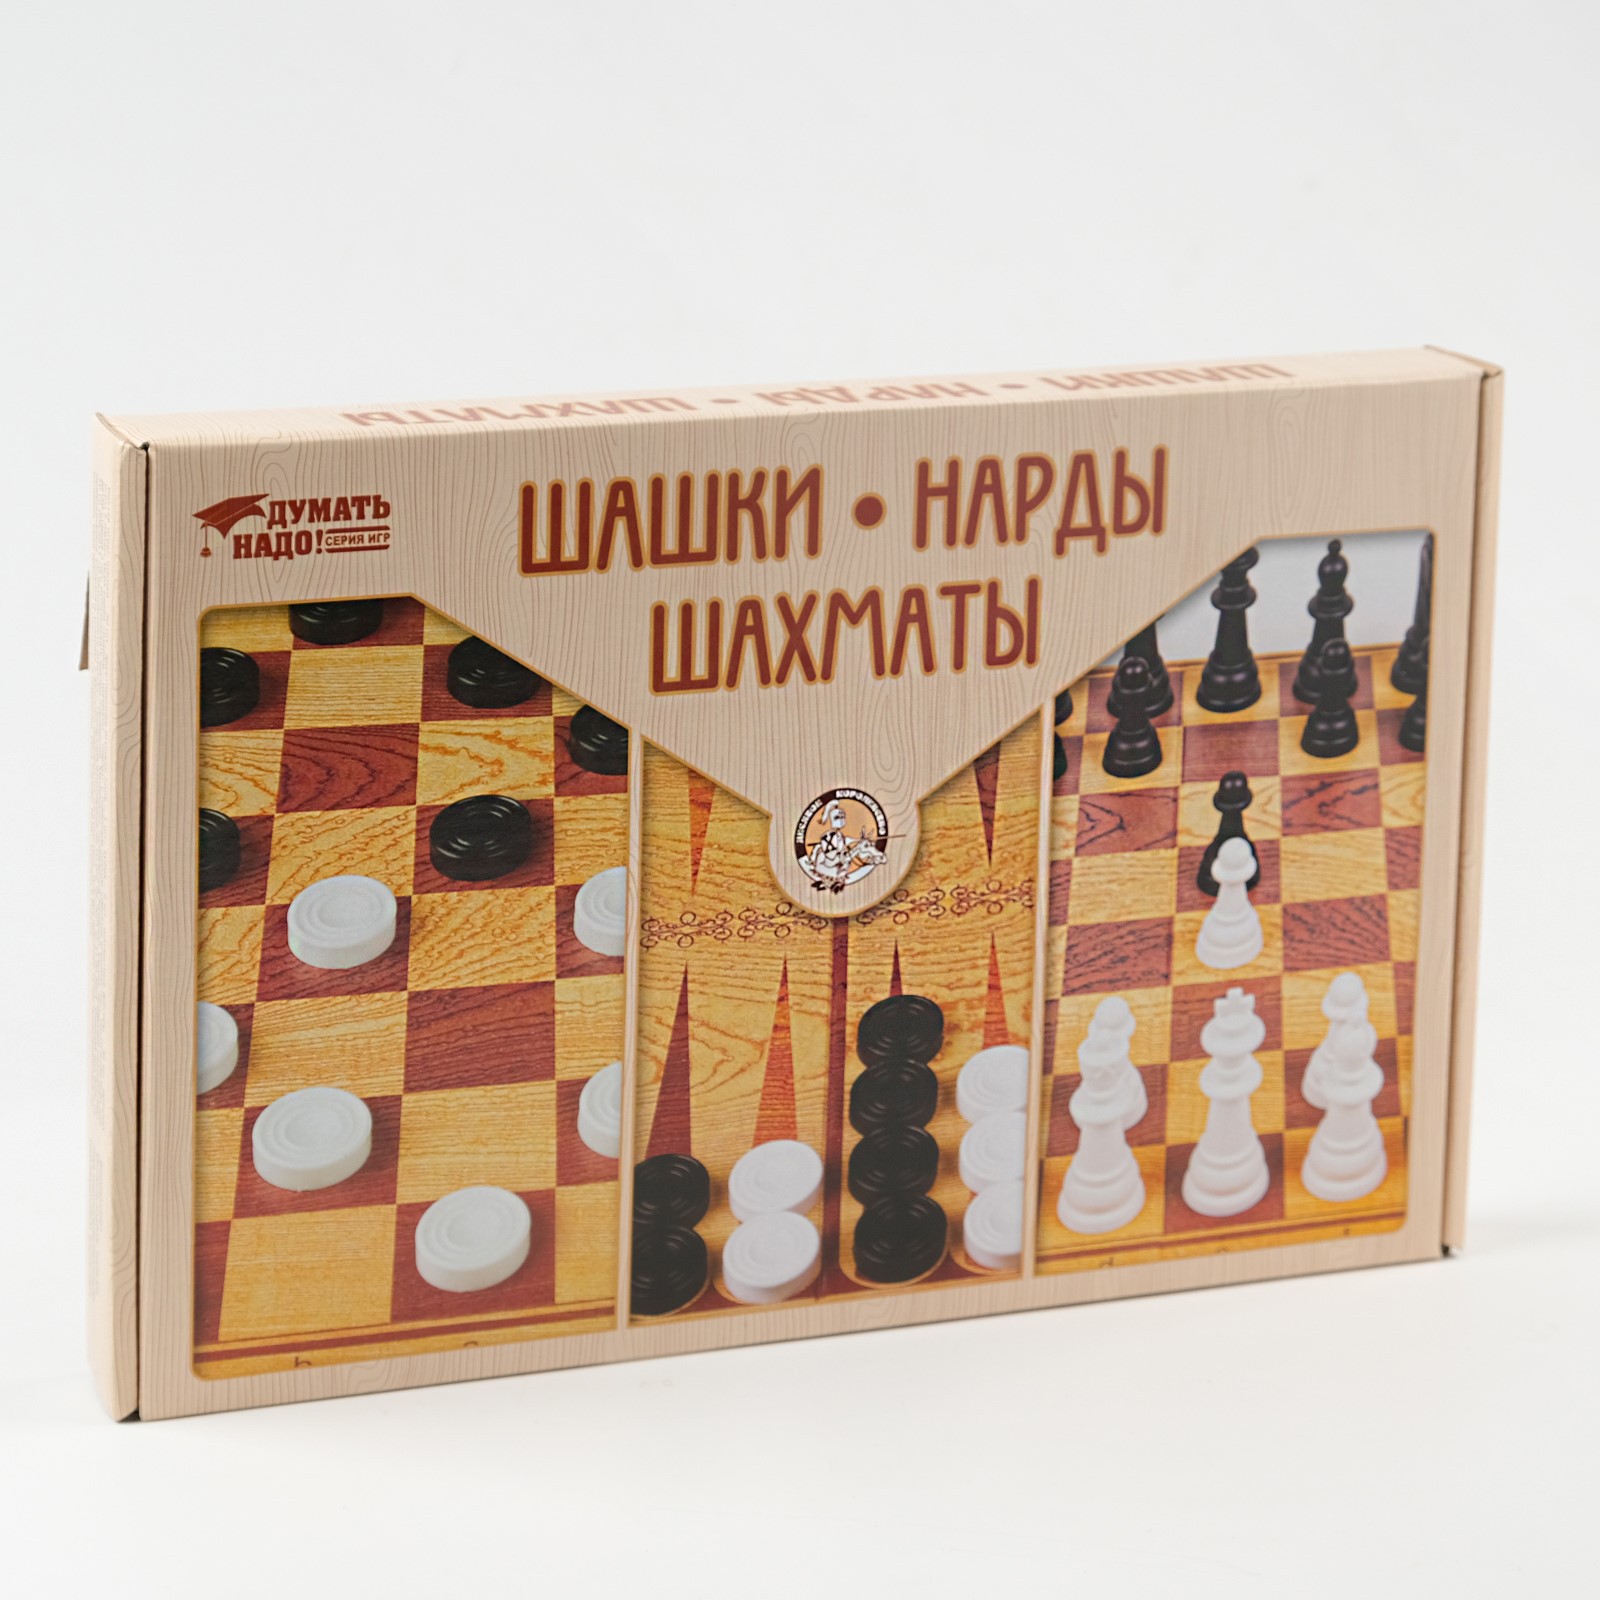 Игра настольная Sima-Land «Шашки нарды шахматы» - фото 4